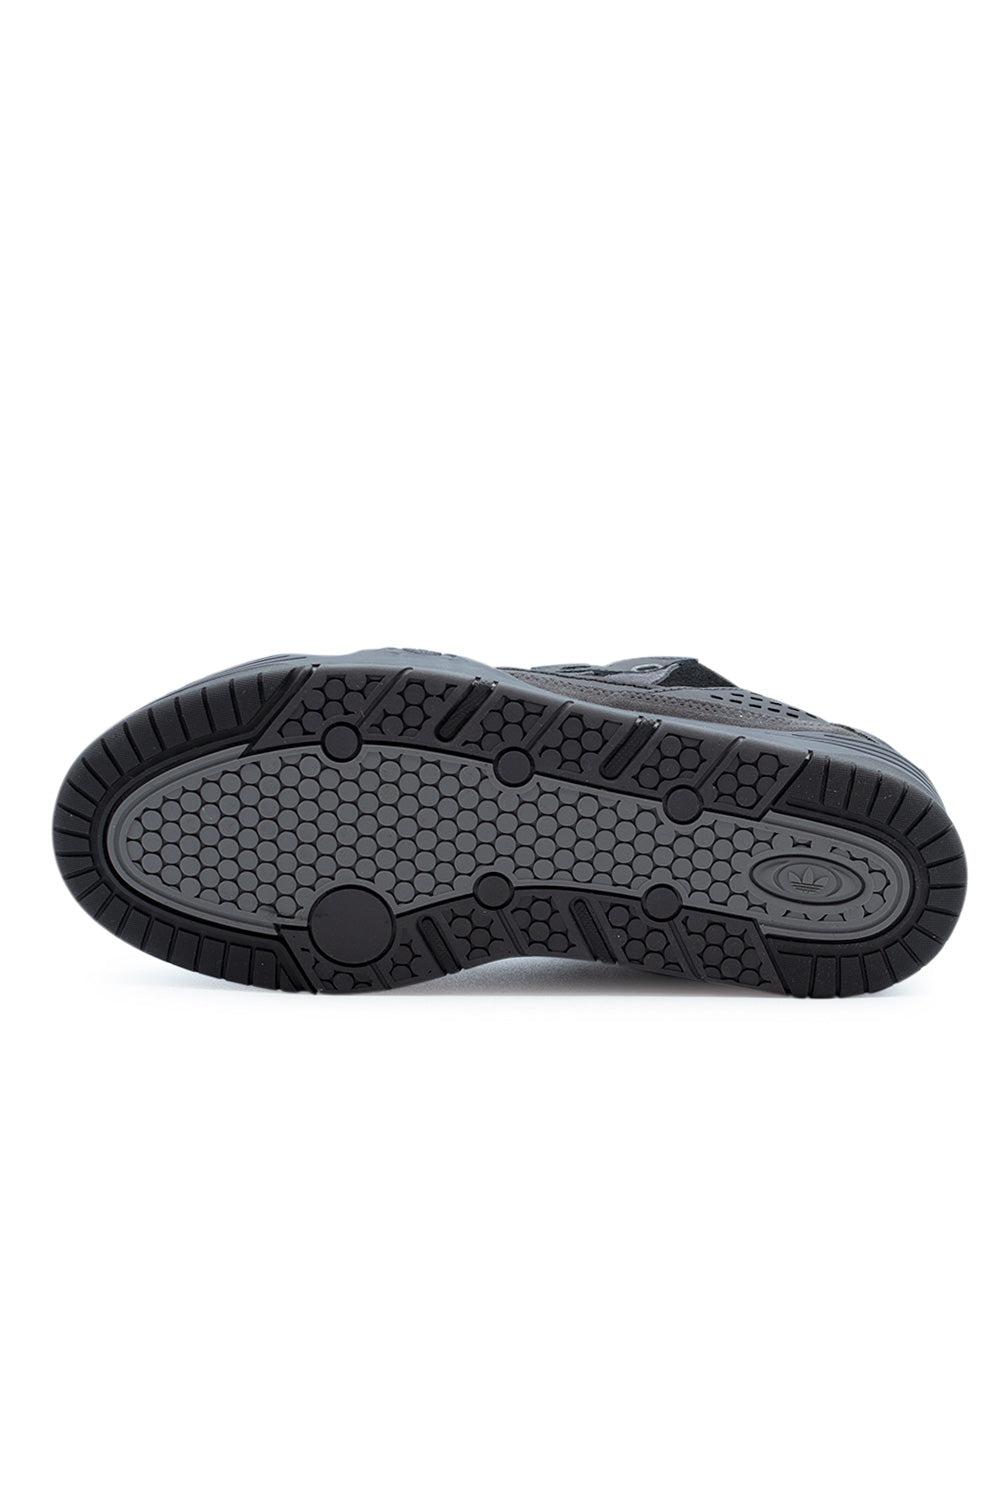 Adidas Adi2000 Shoe Core Black / Utility Black / Utility Black | BONKERS